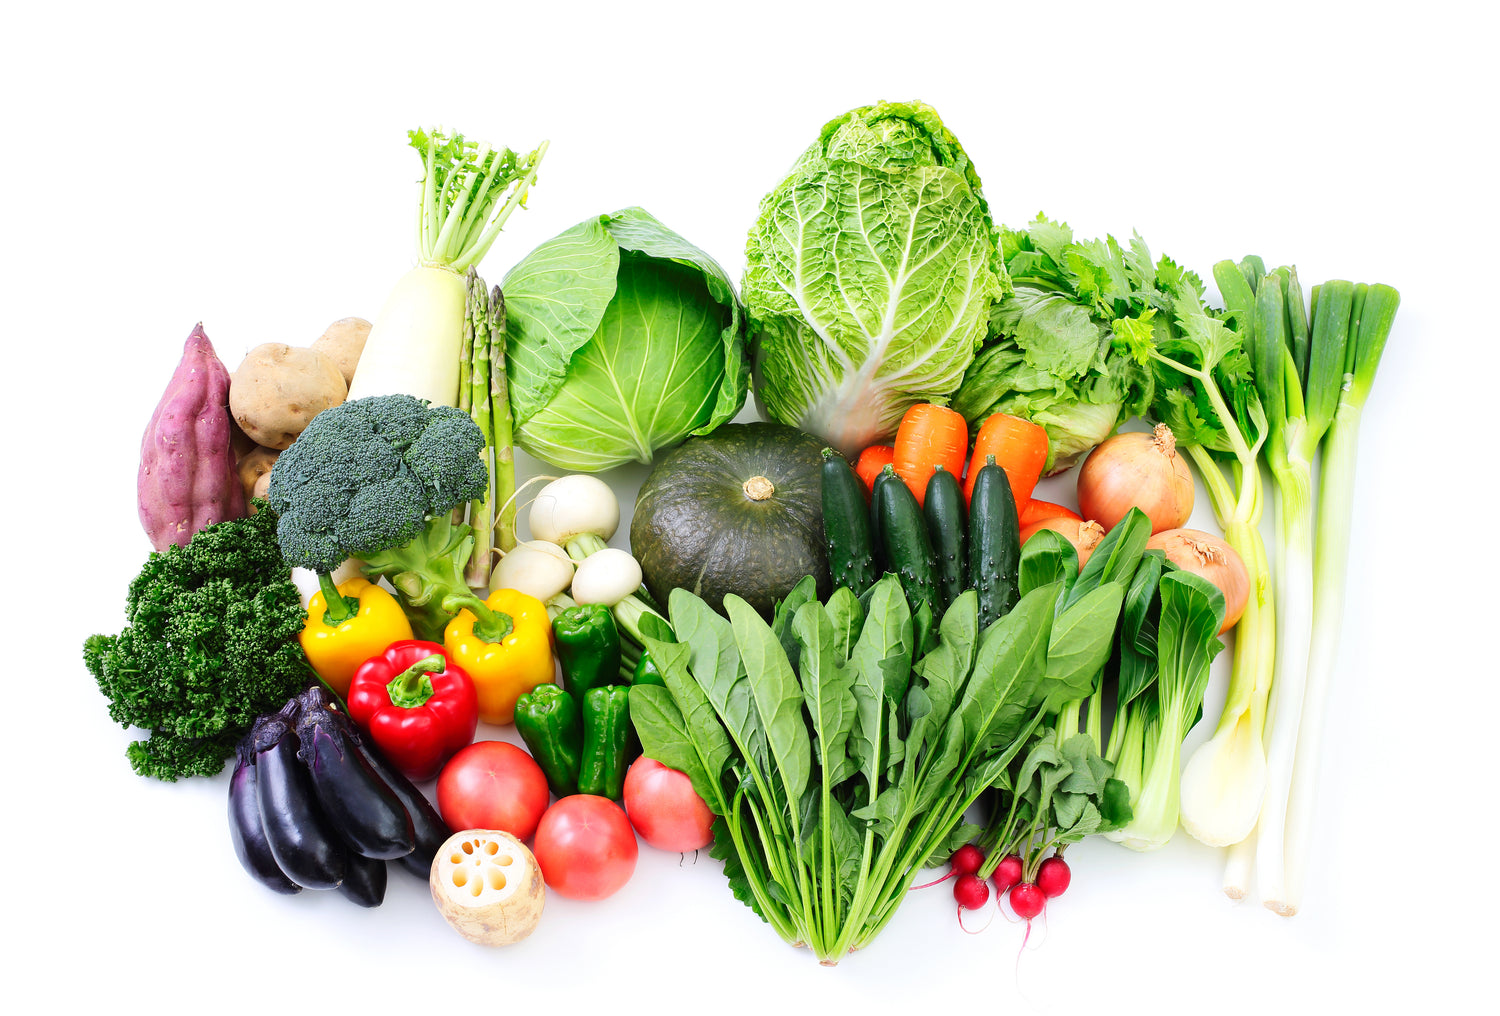 Carton Vegetables & Fruits